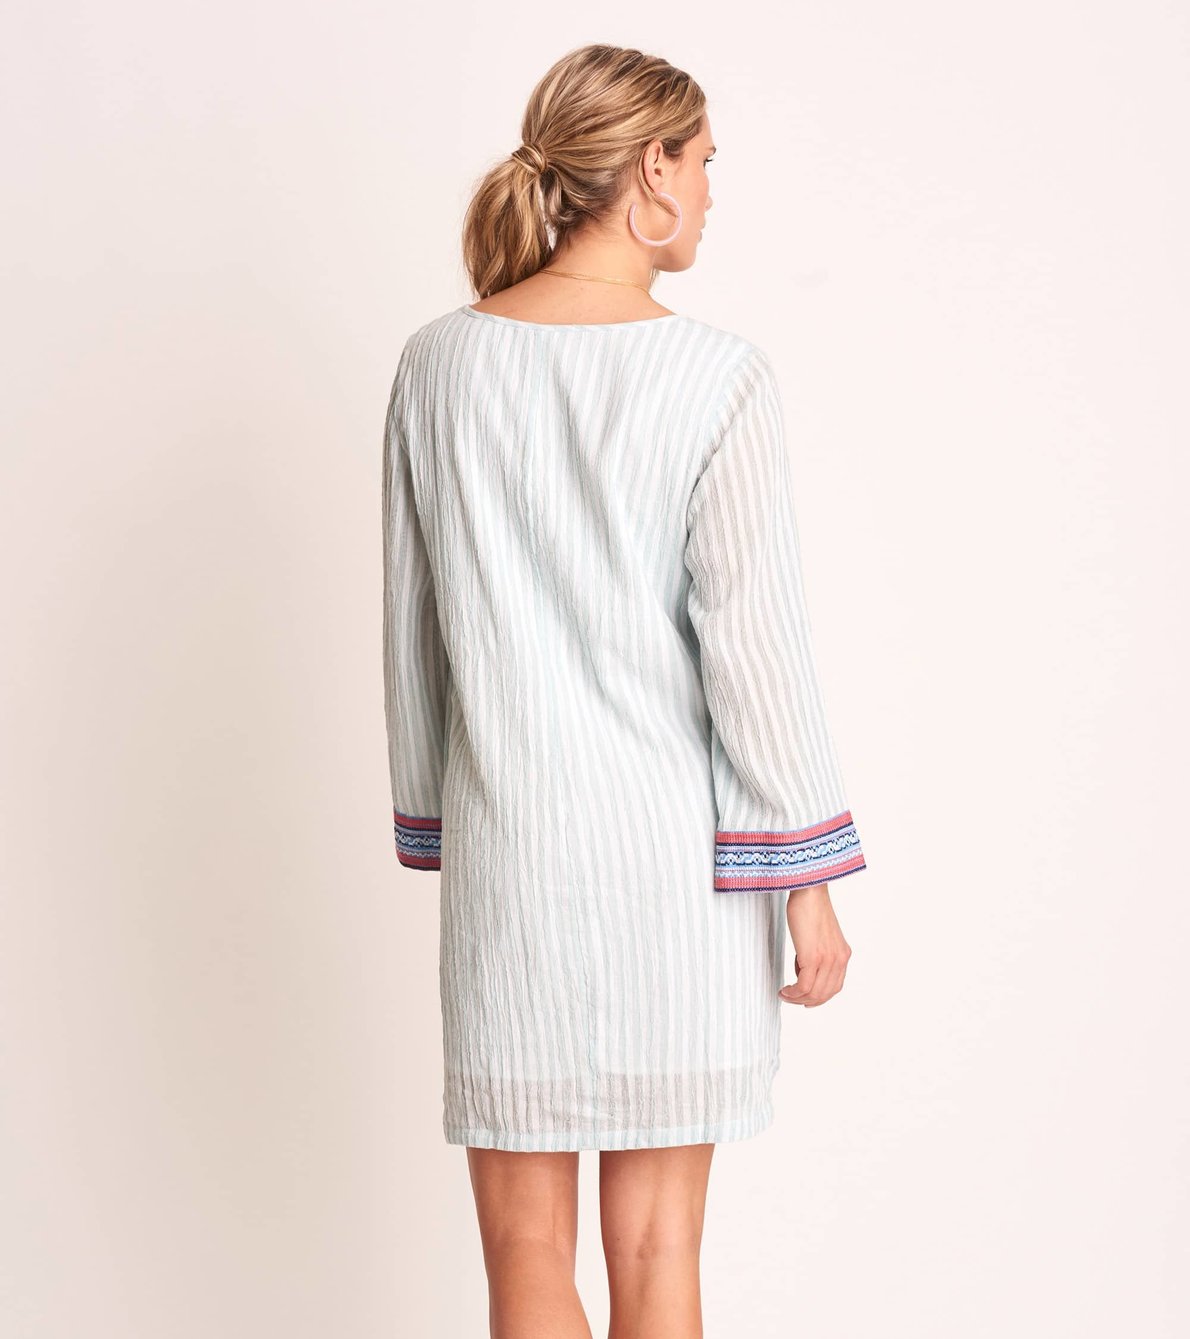 View larger image of Tori Dress - Summer Stripes